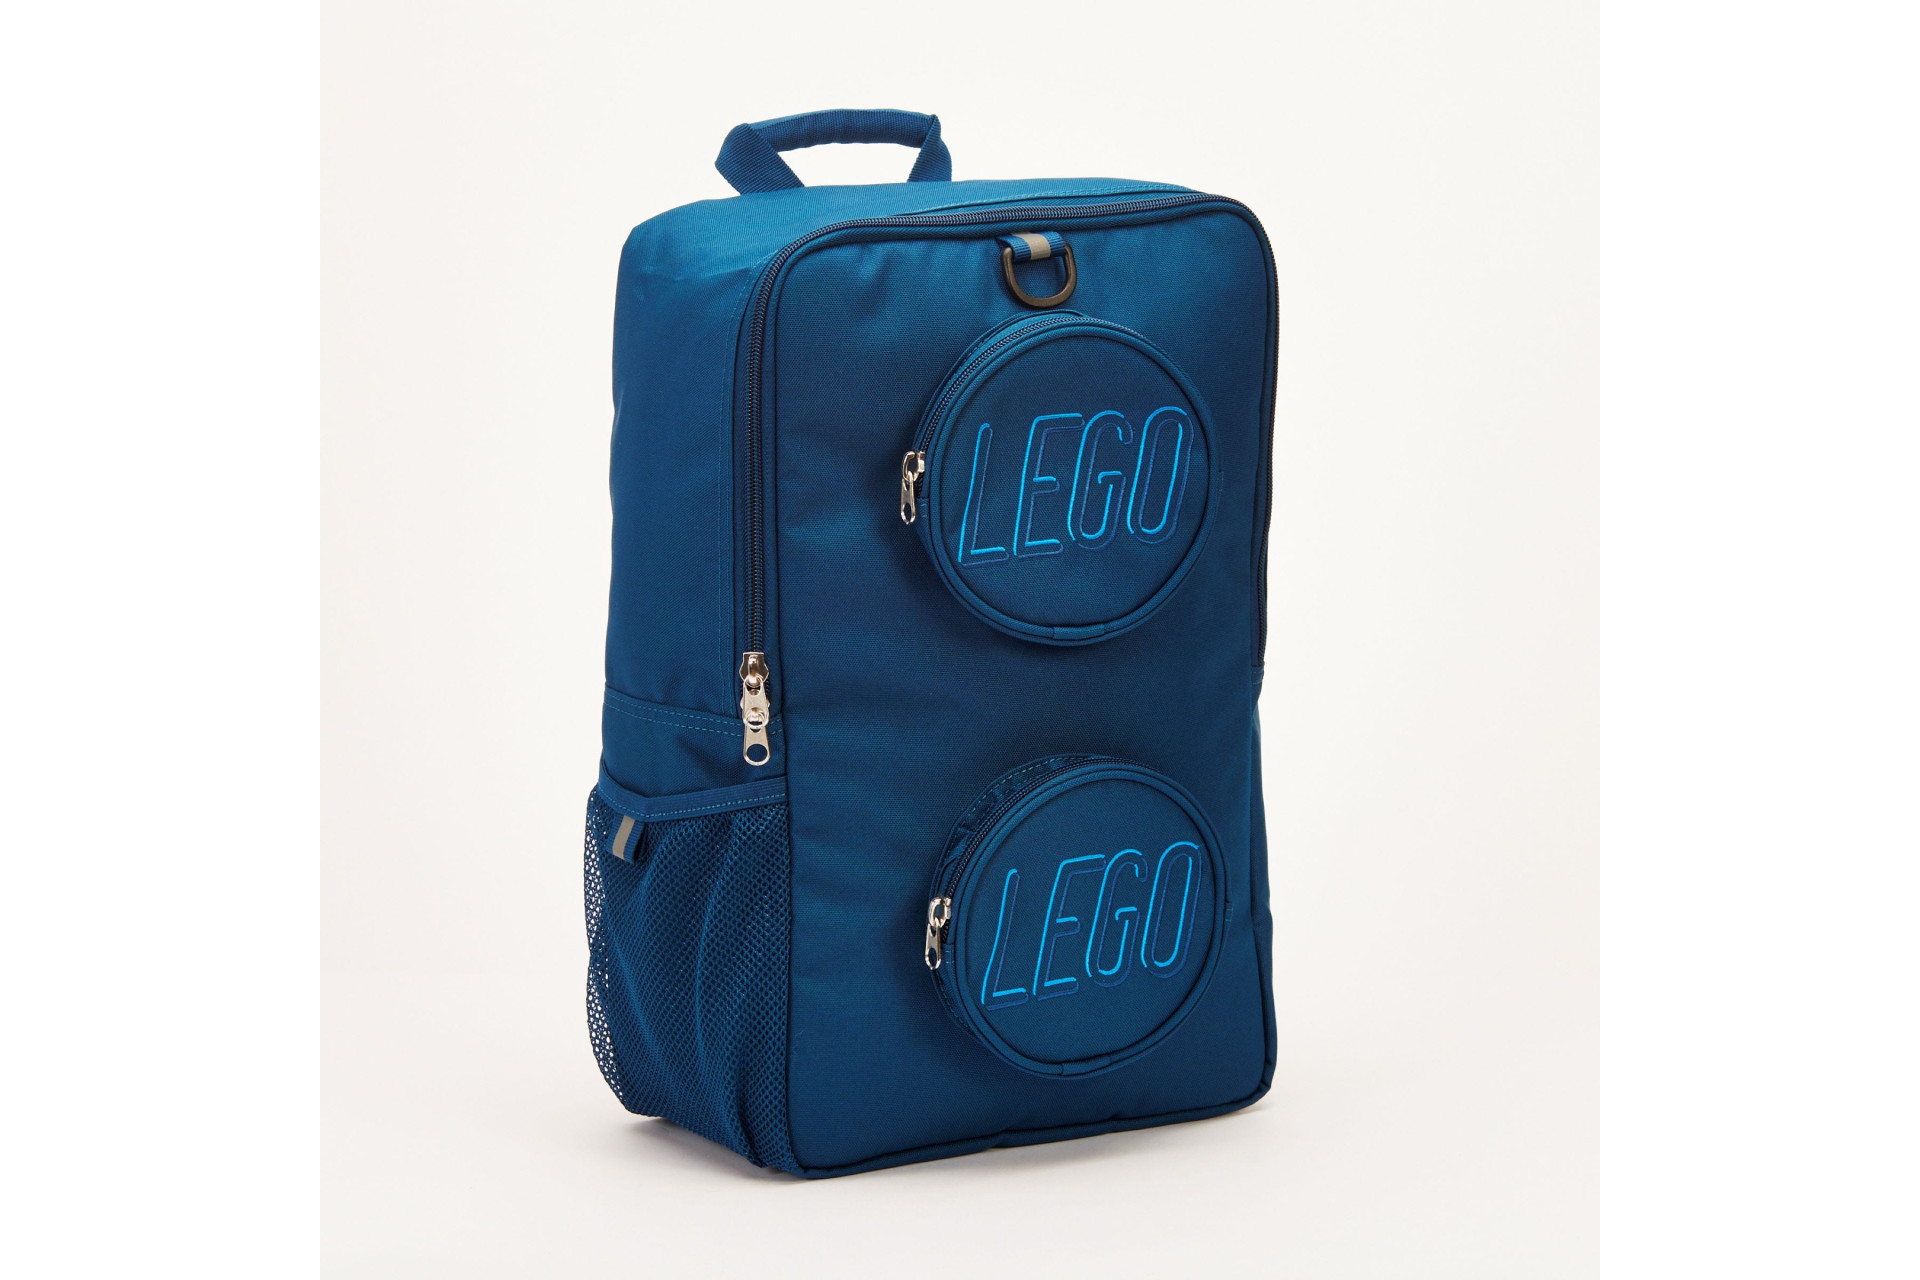 Acheter Lego 5008730 Sac à dos en forme de brique - Bleu marine